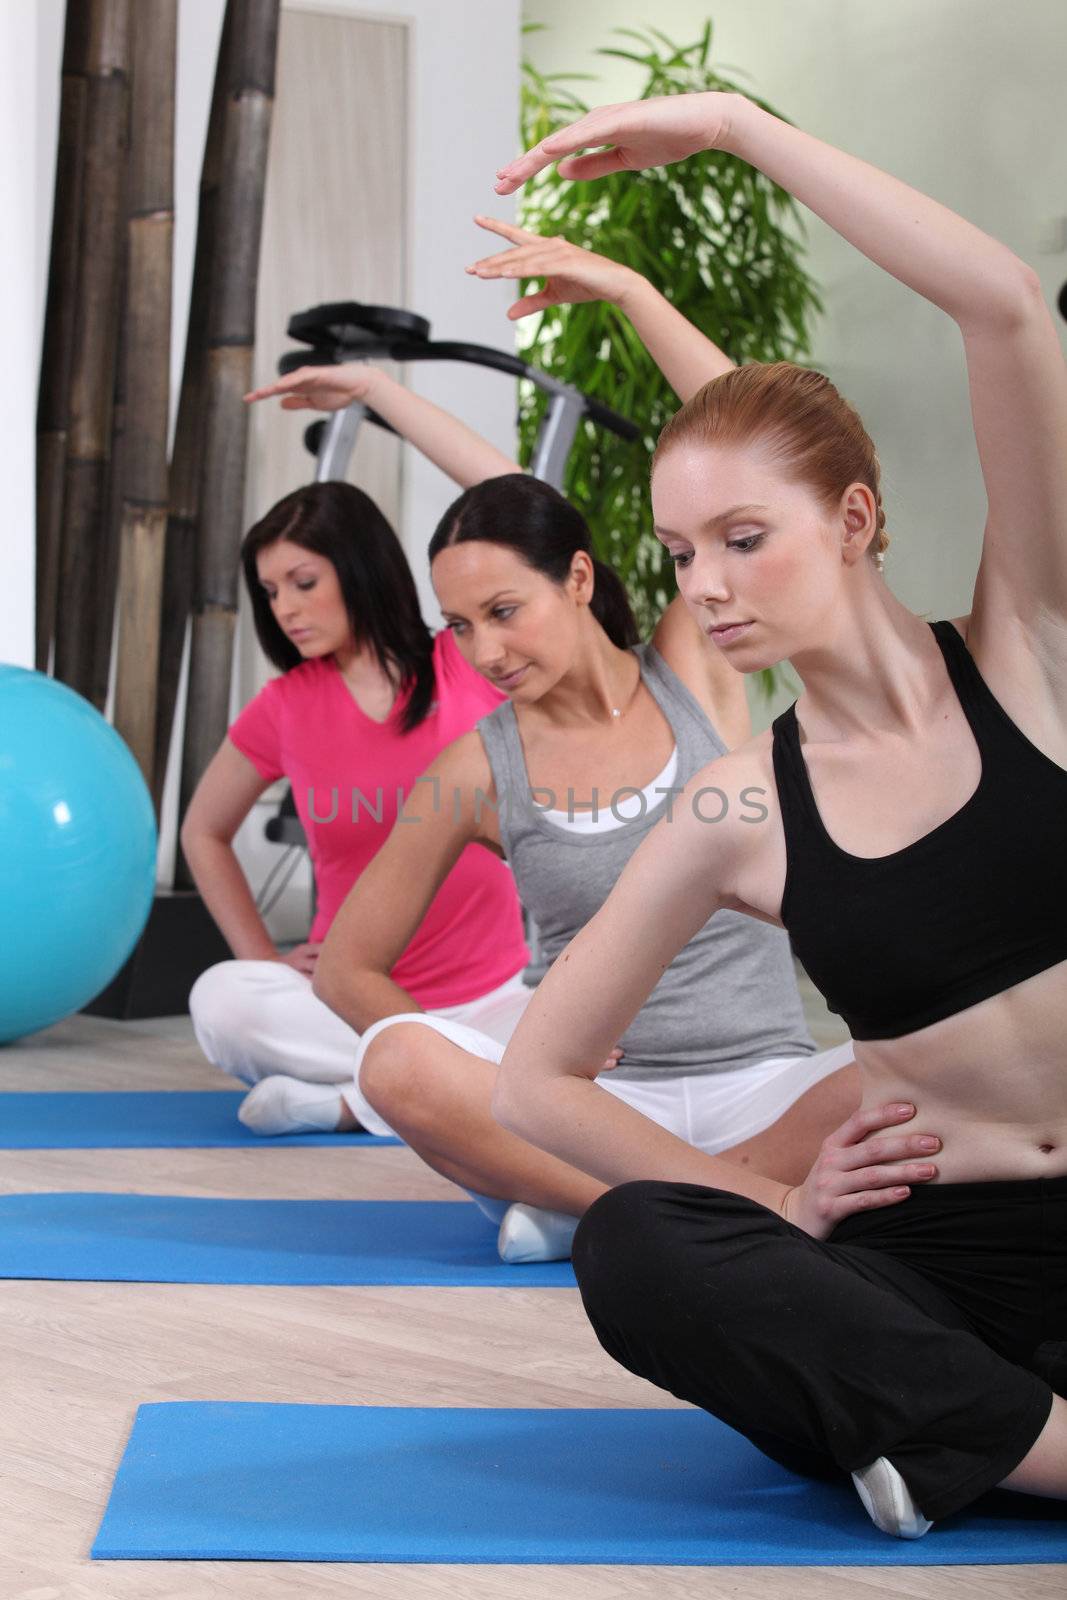 female threesome doing exercise indoors